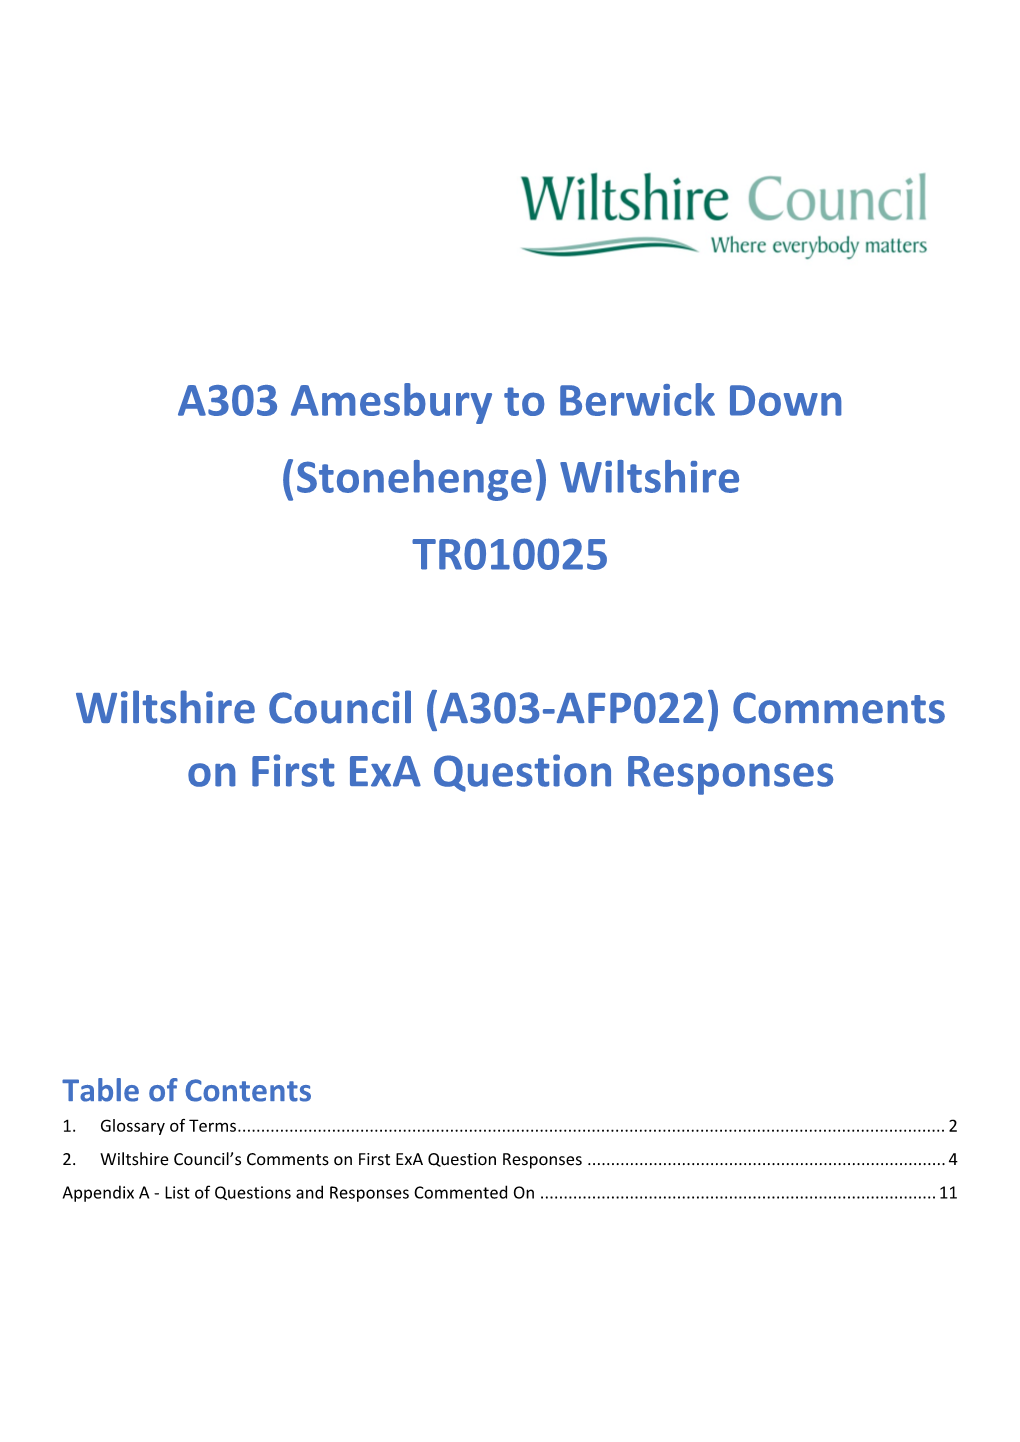 A303 Amesbury to Berwick Down (Stonehenge) Wiltshire TR010025